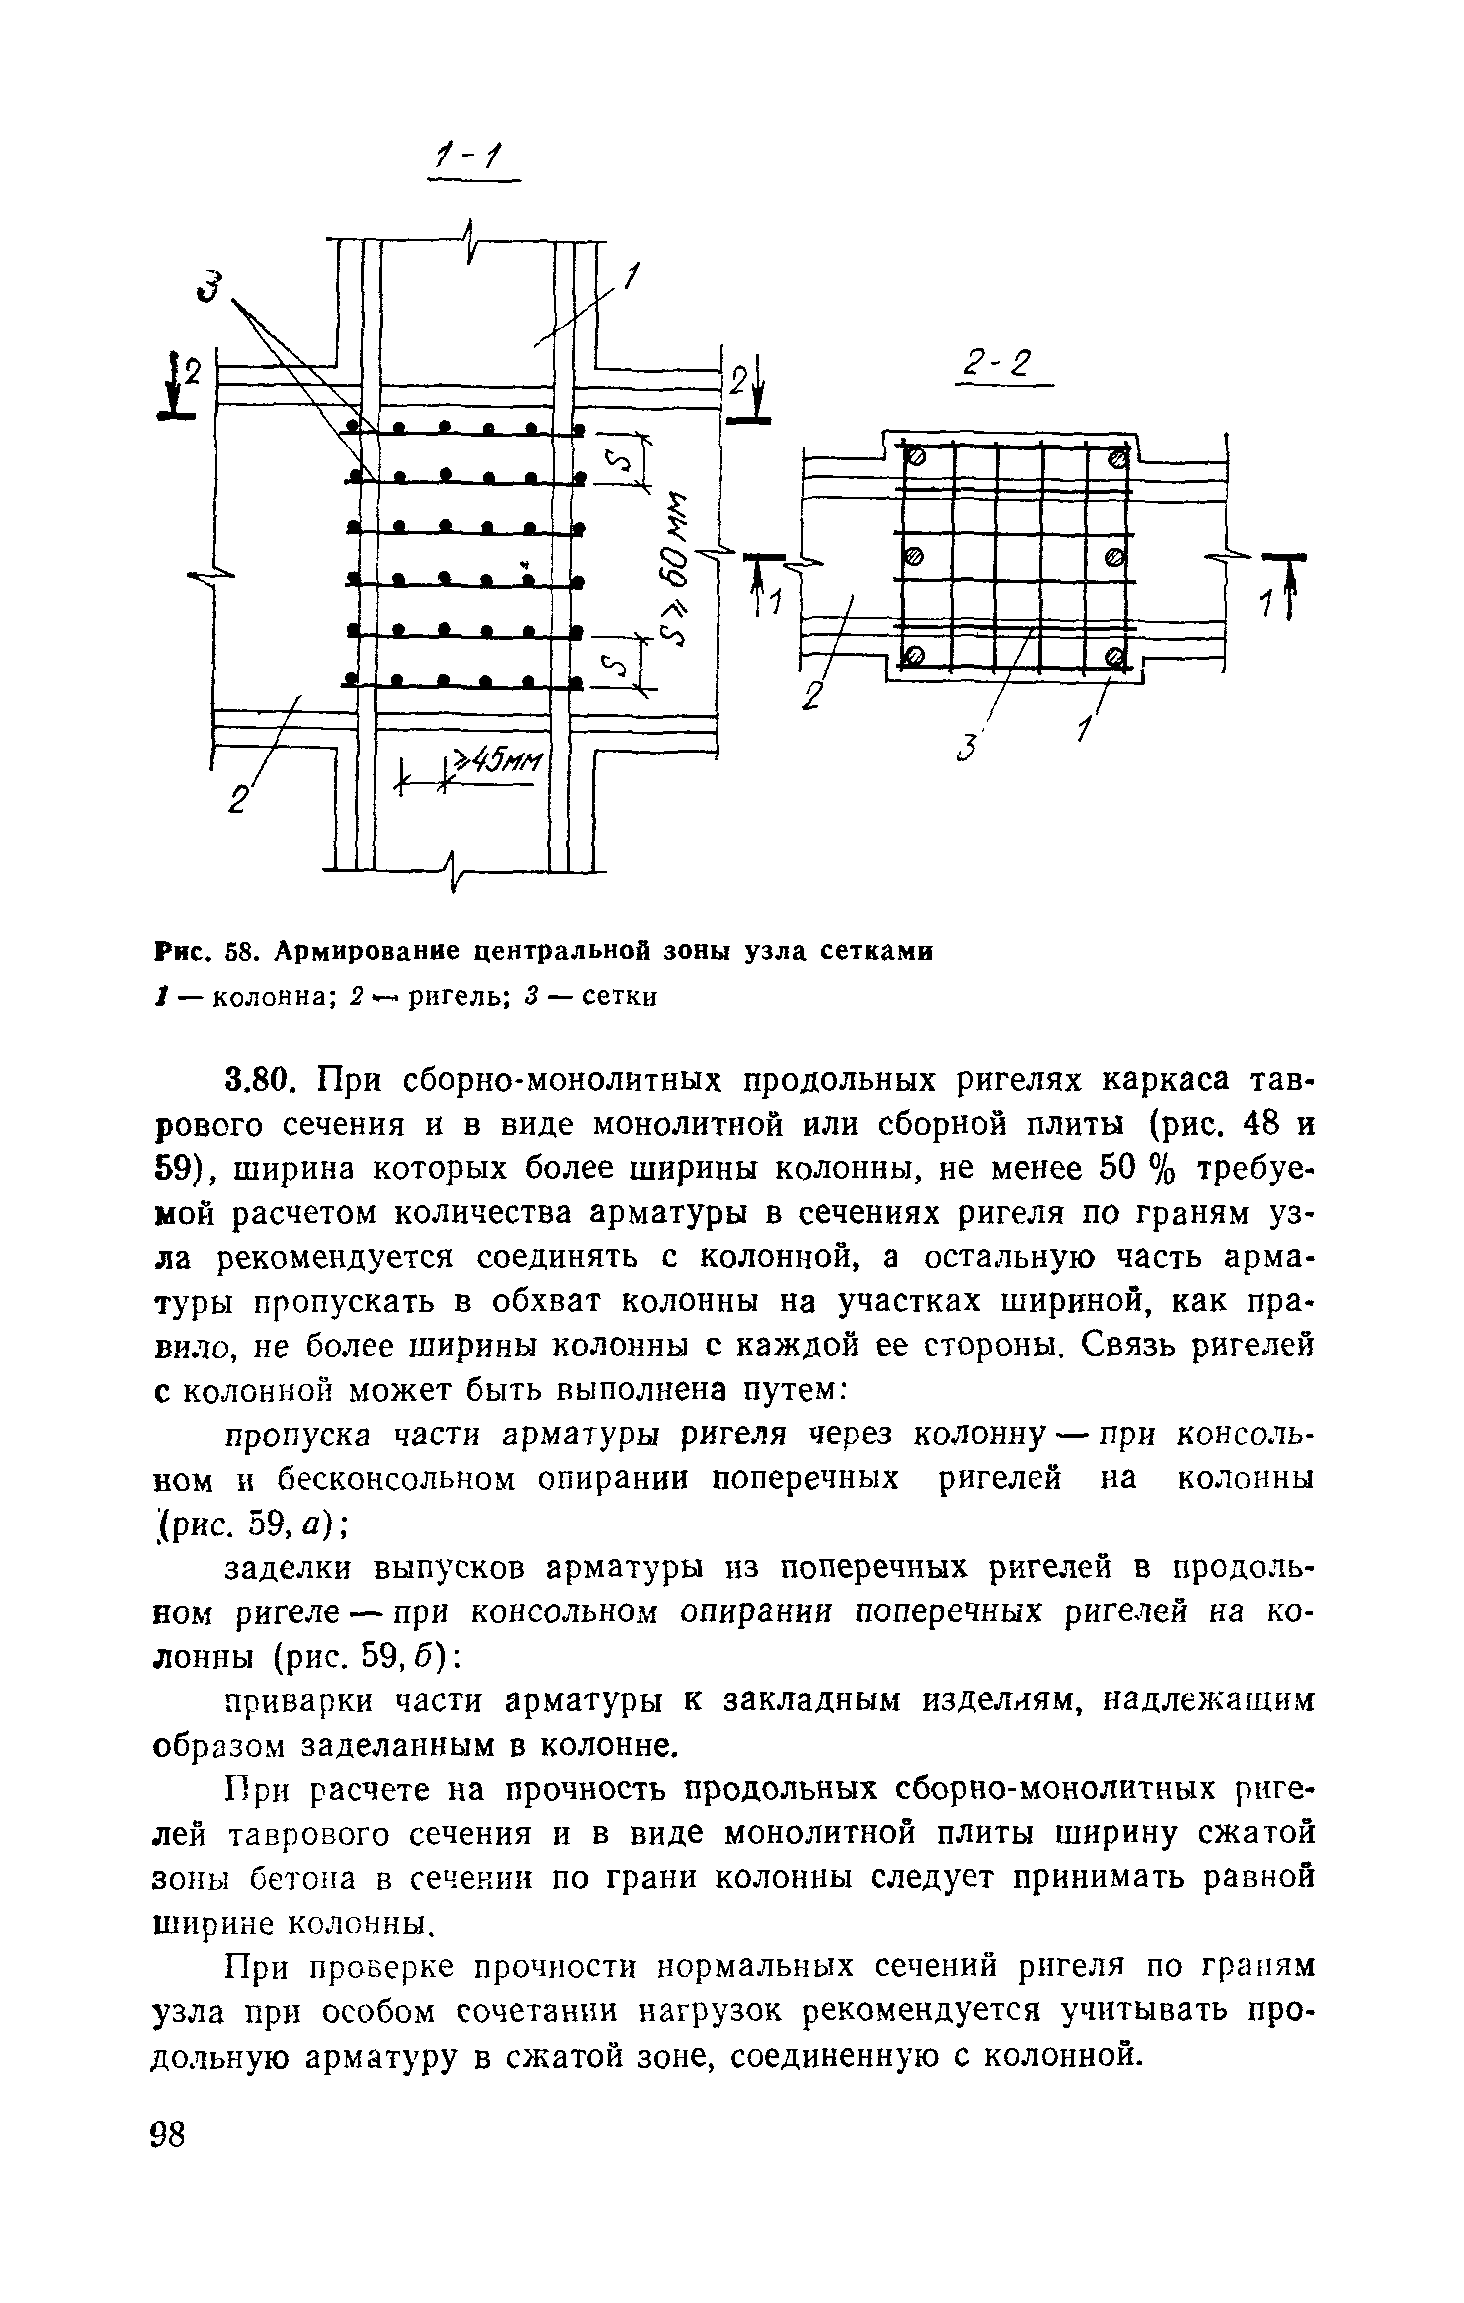 Пособие к СНиП II-7-81